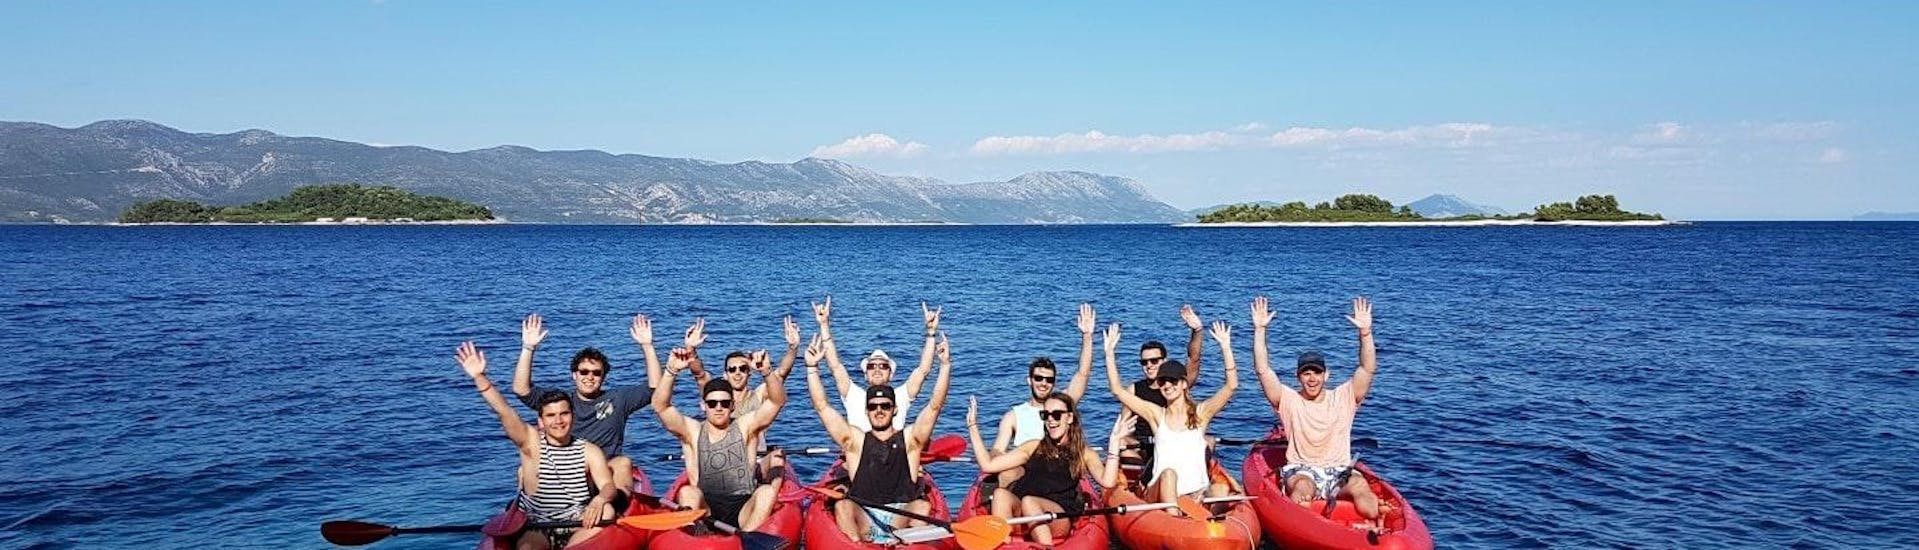 Sea Kayak Tour of the Korčula Archipelago.